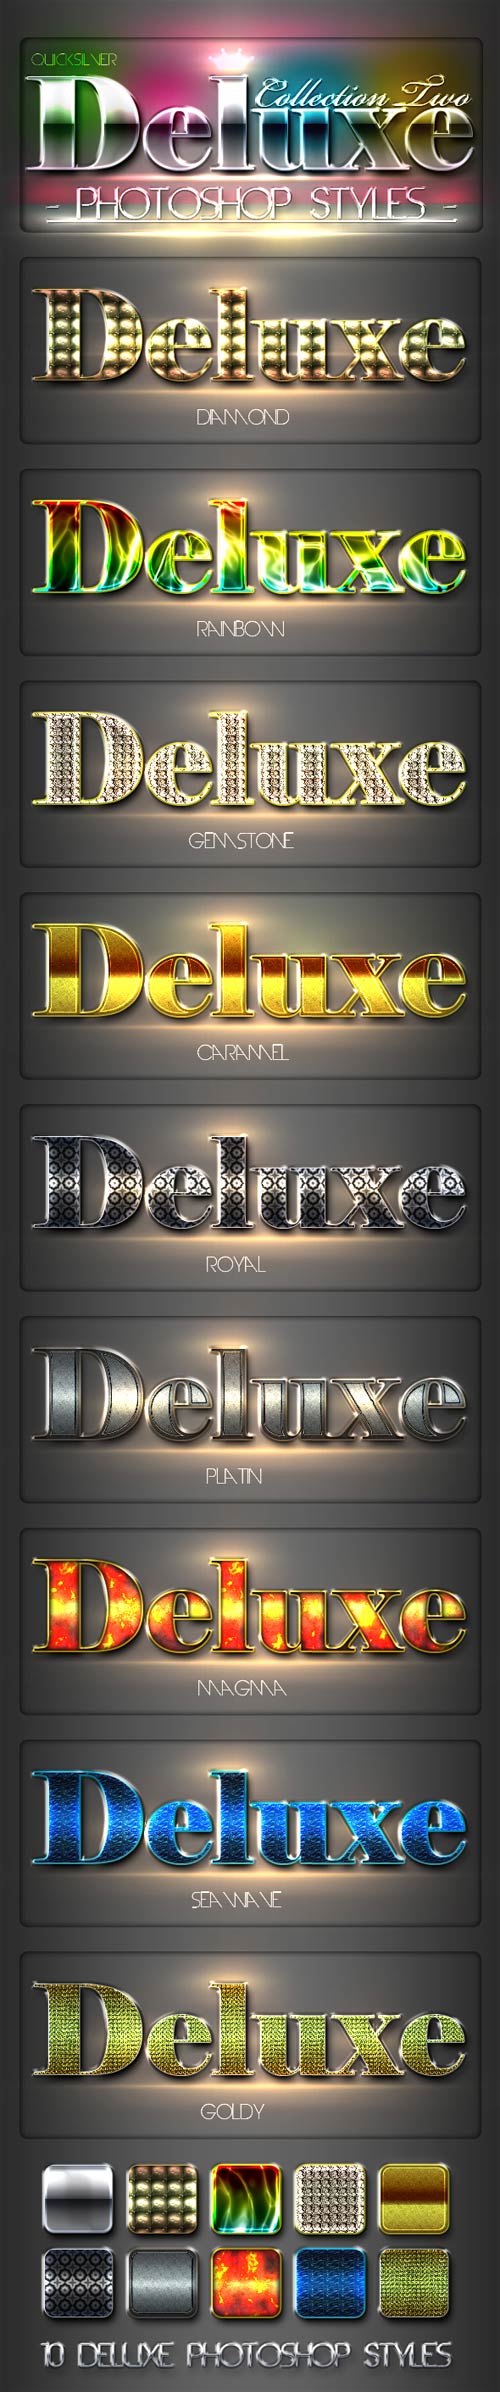 10 Deluxe Photoshop Styles - GraphicRiver